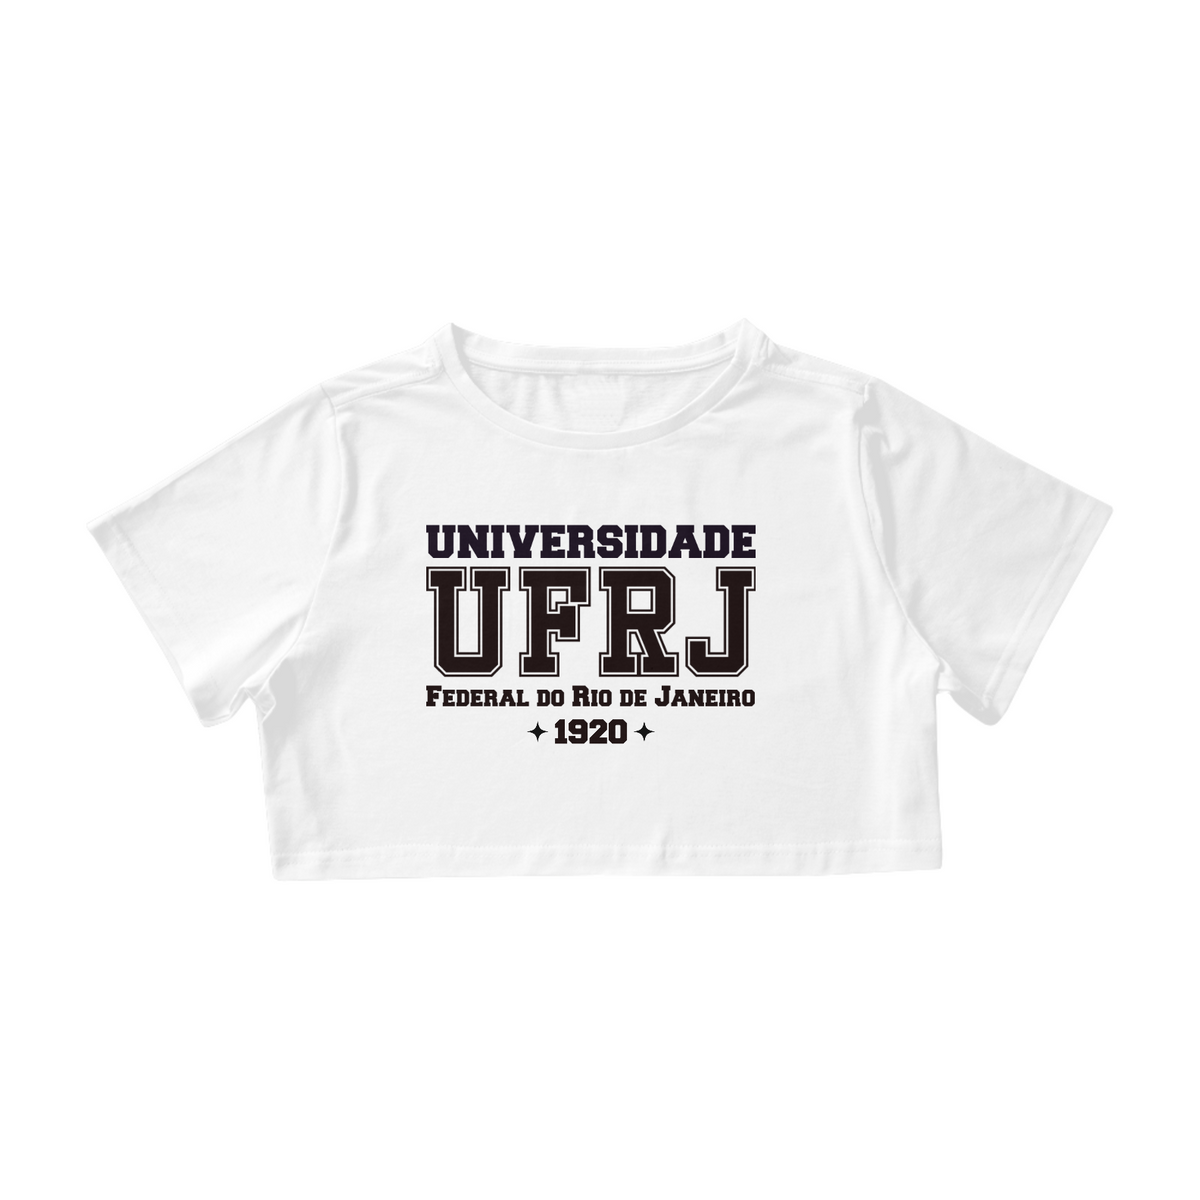 Nome do produto: Horizontes | Cropped UFRJ